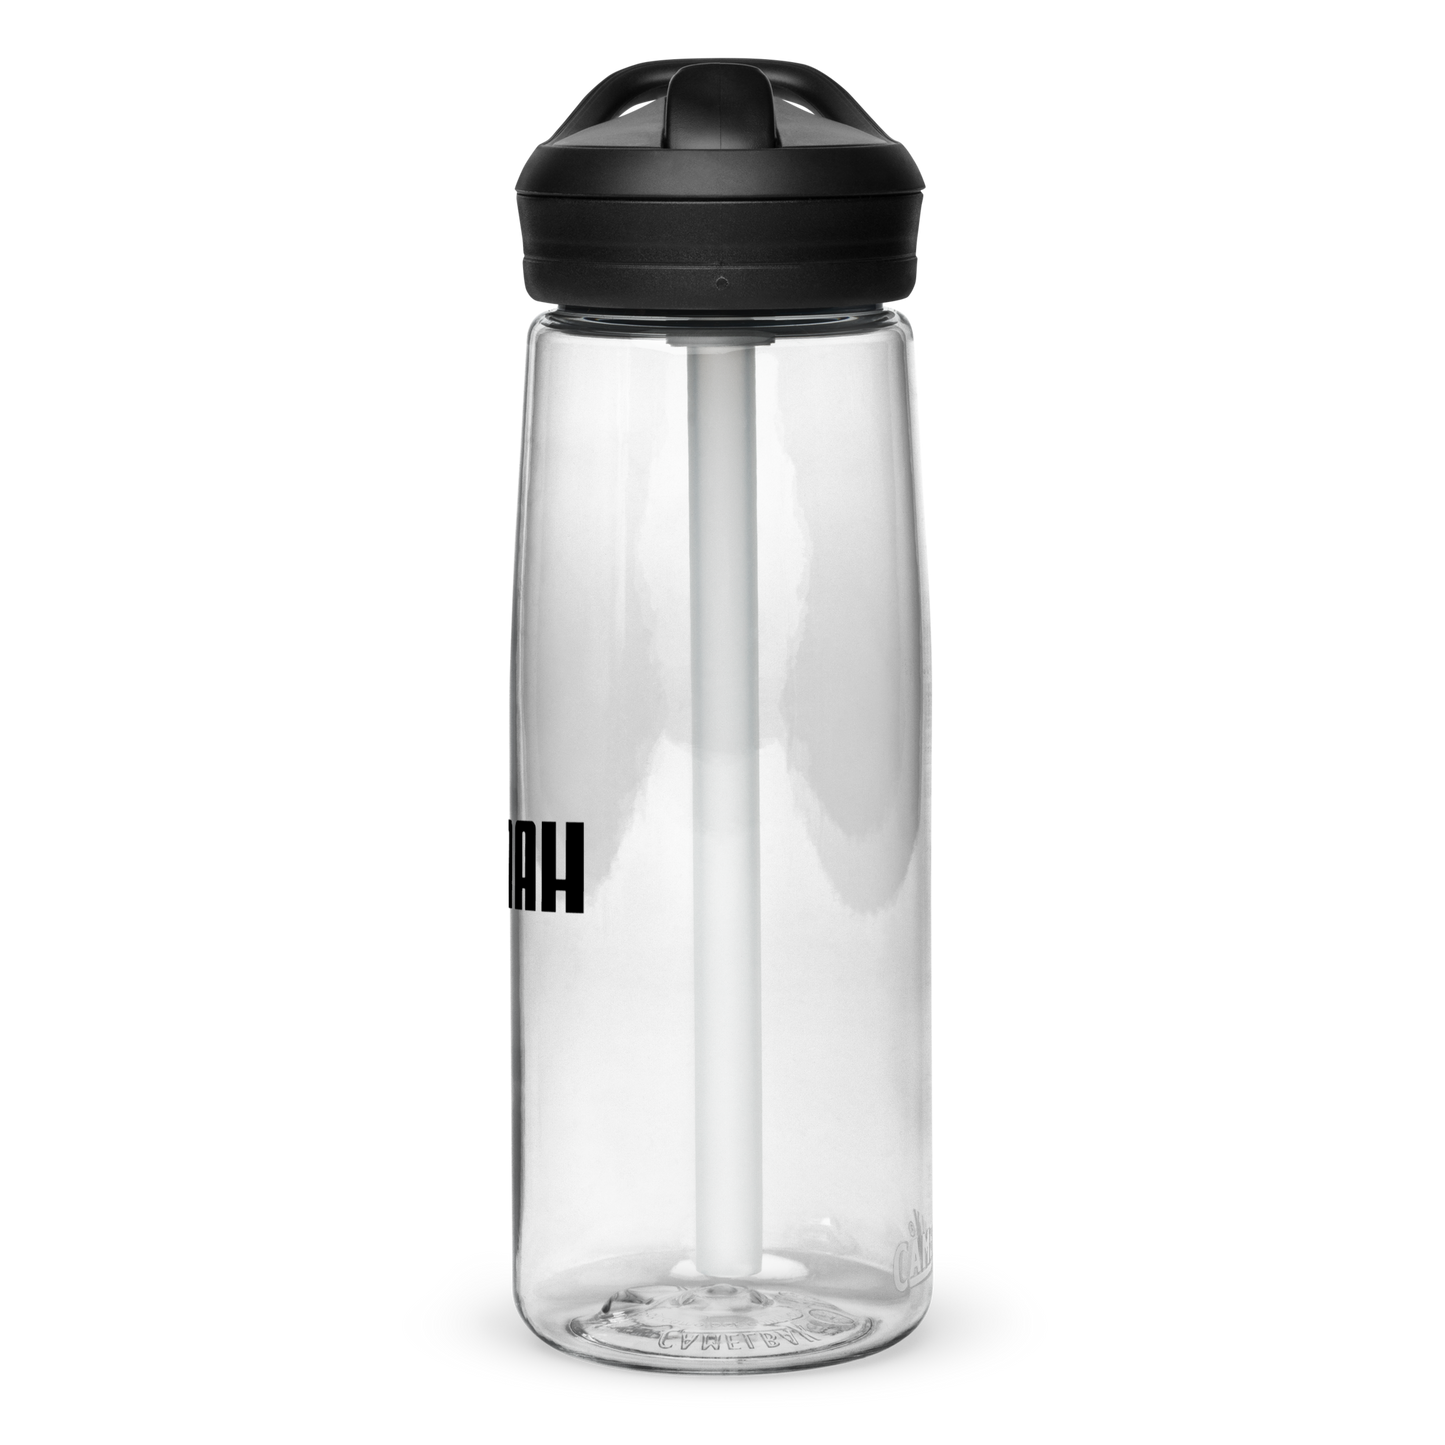 DRINK Water Bottle w/ Lid and Straw - UMMAH (Centered/Medium) - Black